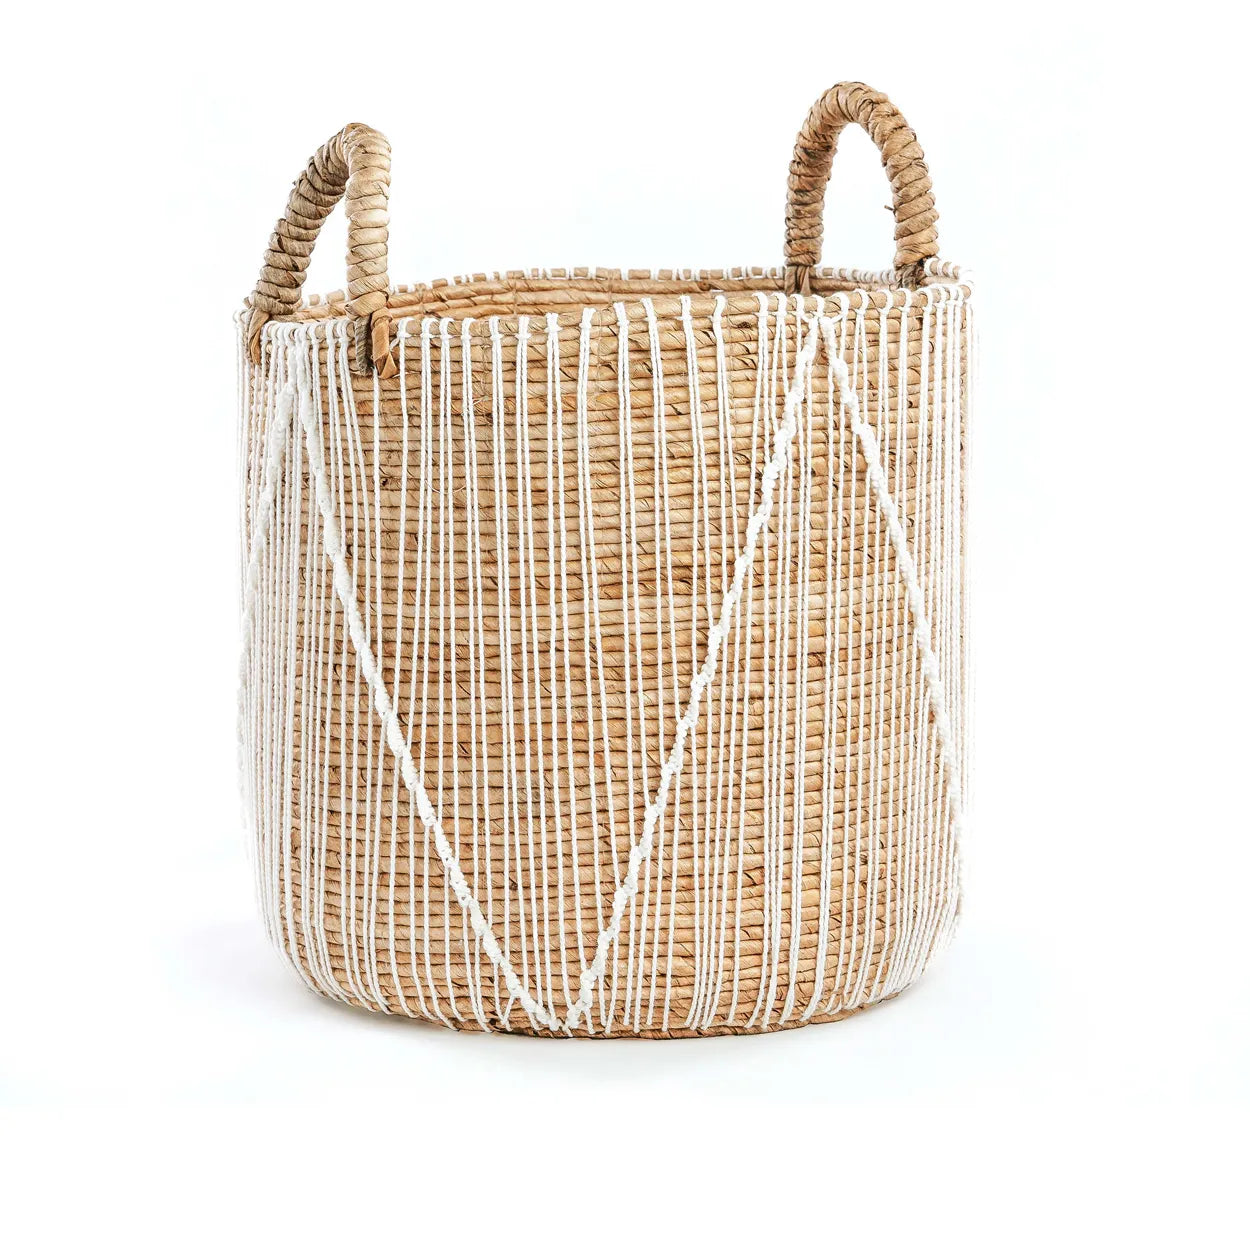 Algeciras Intricate Basket - Seagrass Organizer